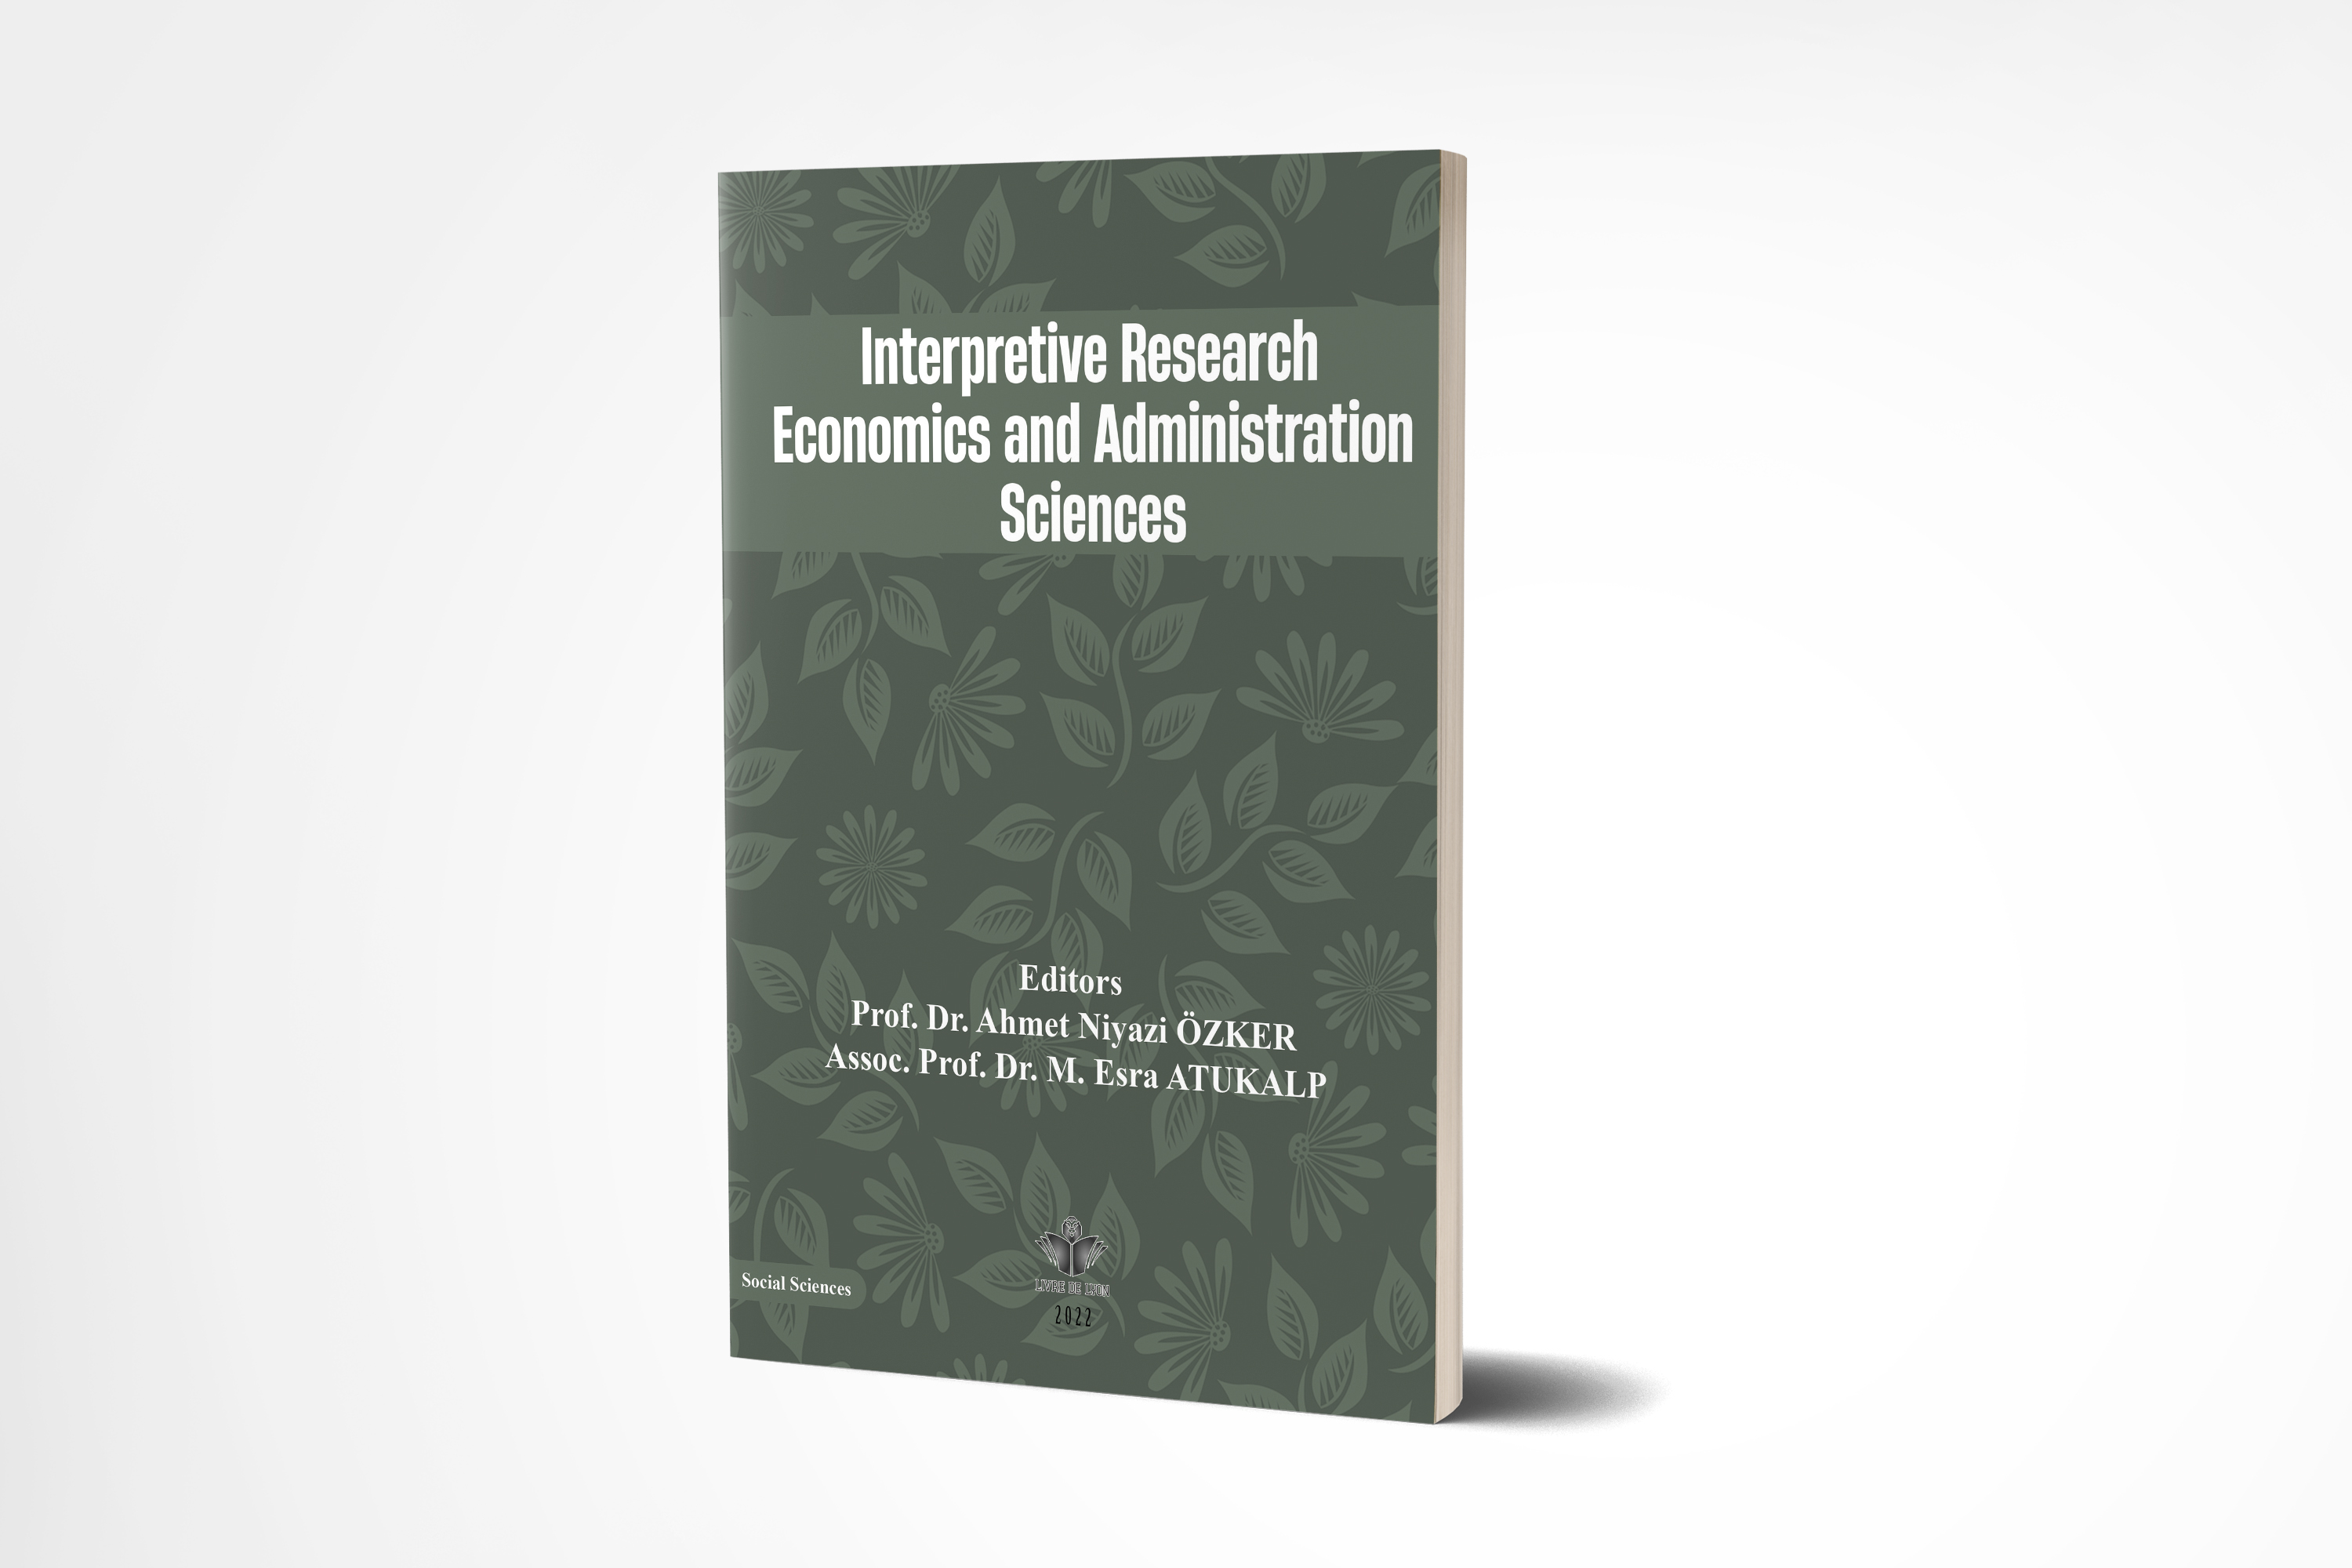 Interpretive Research: Economics and Administration Sciences